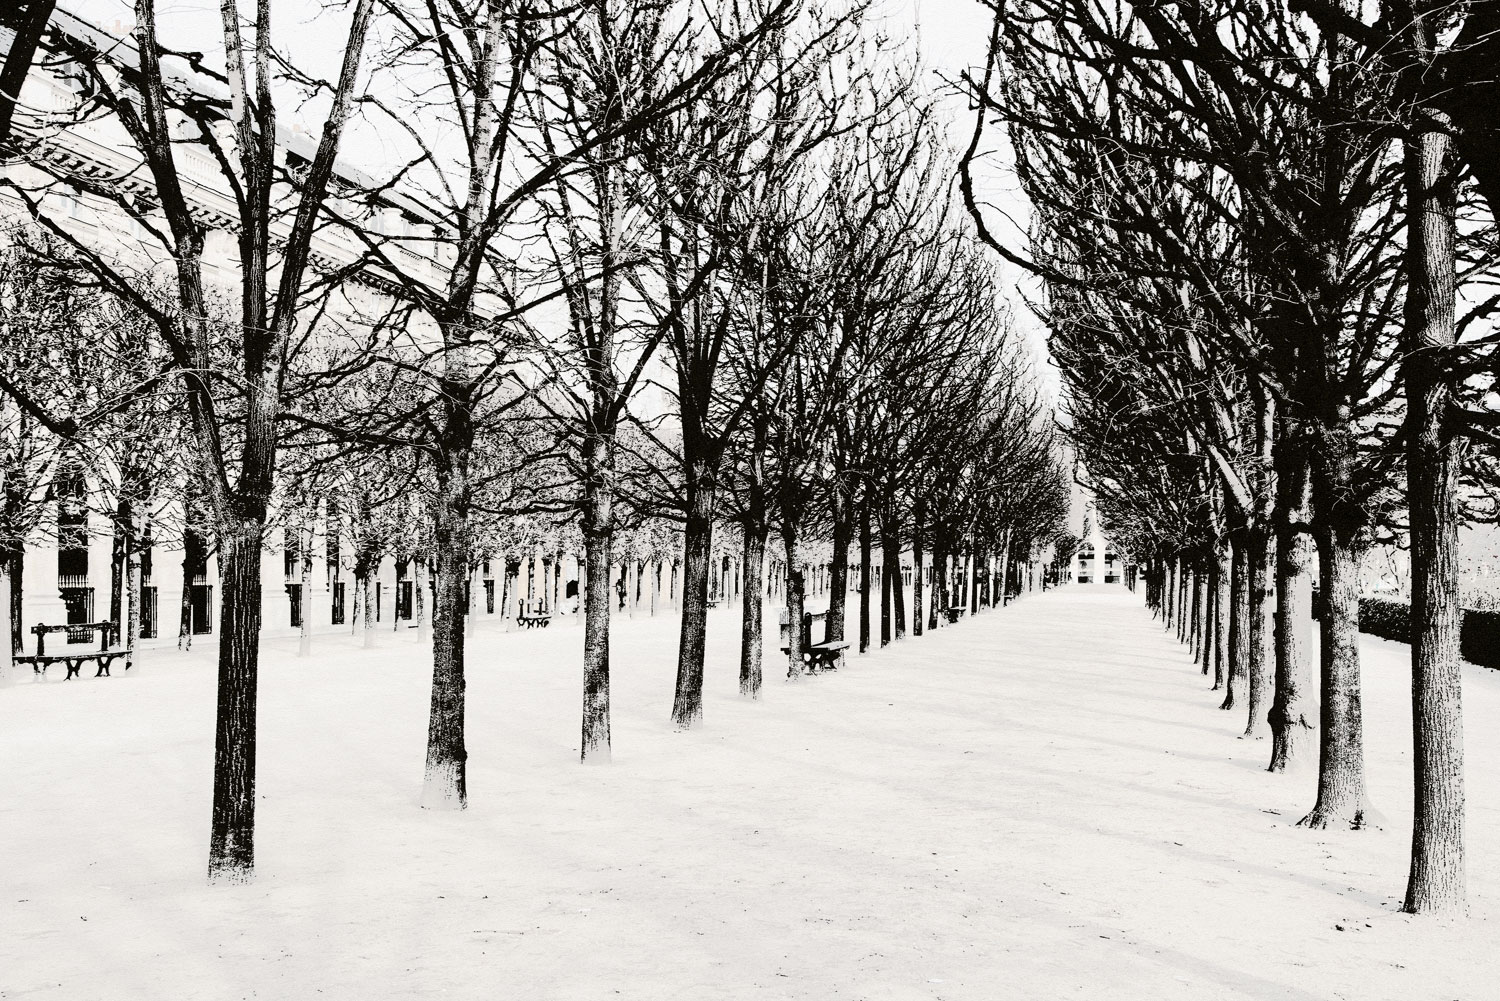 Palais Royale mit Schnee